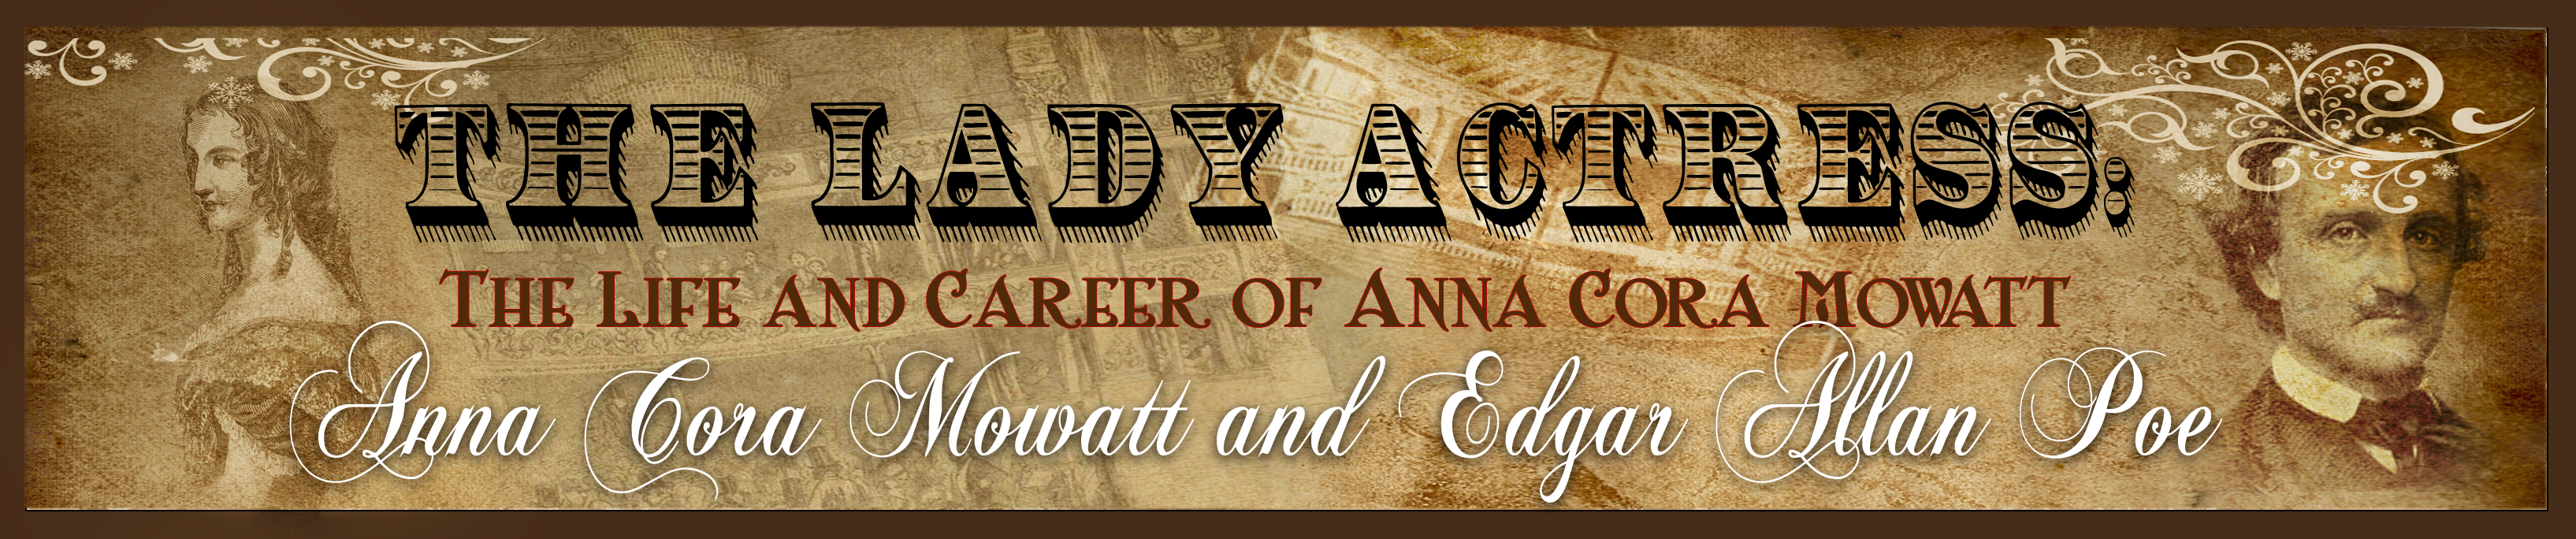 Anna Cora Mowatt and Edgar Allan Poe